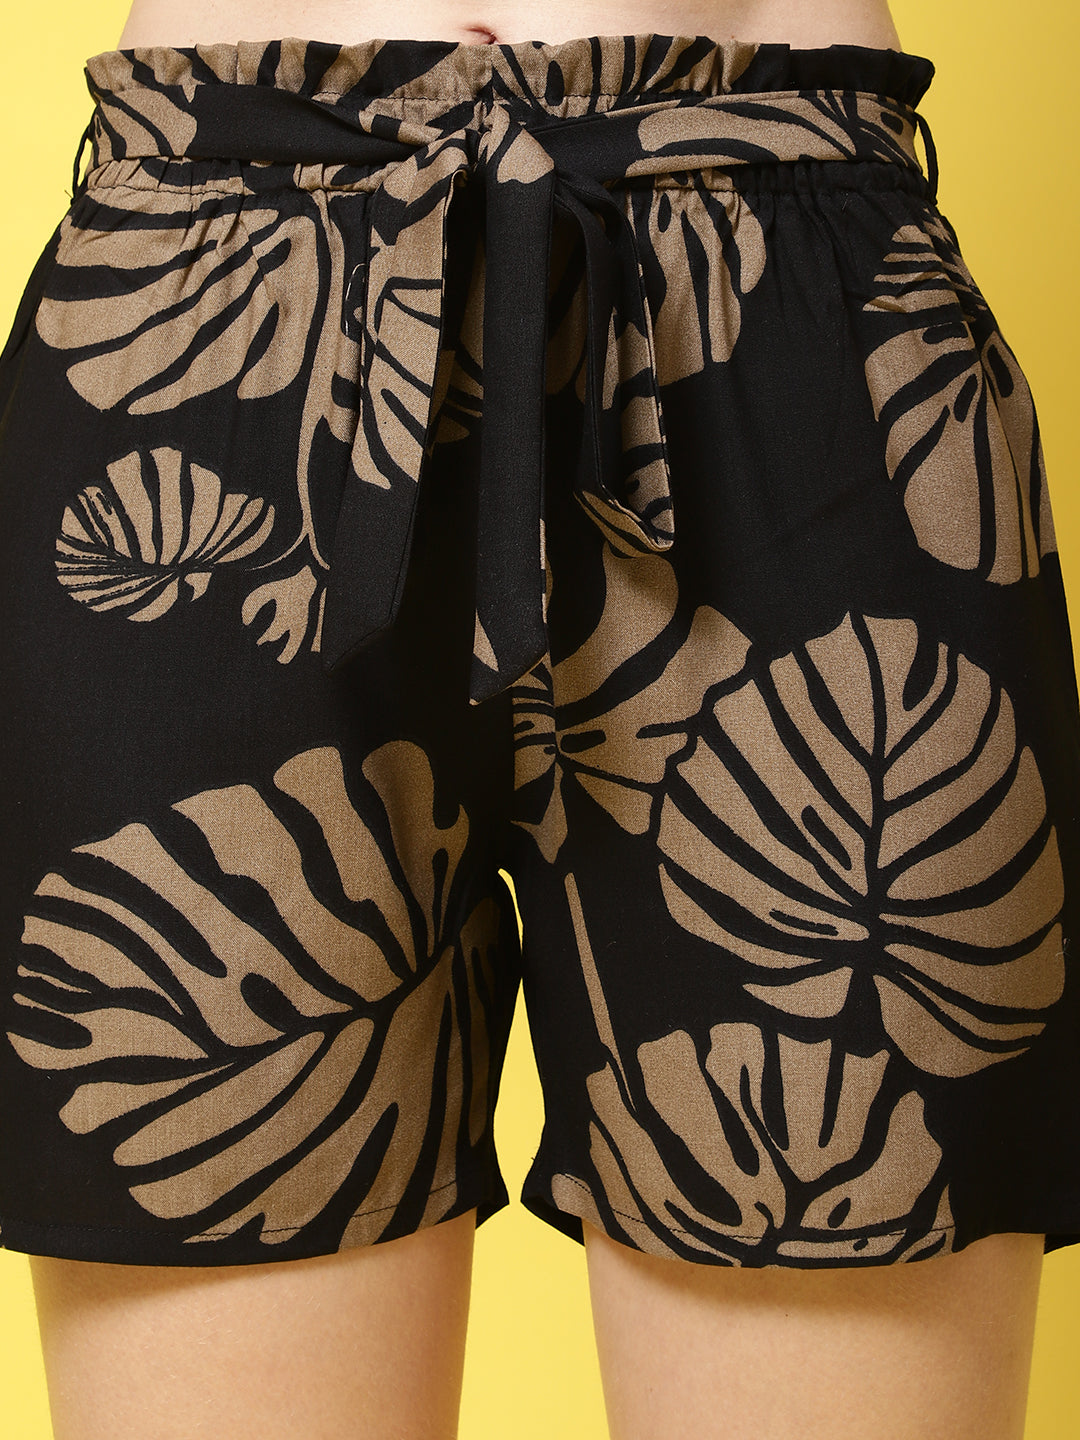 Black Abstract Printed Viscose Rayon Shorts For Women Claura Designs Pvt. Ltd. Short Abstract Printed, Black, Loungeshort_size, Rayon, short